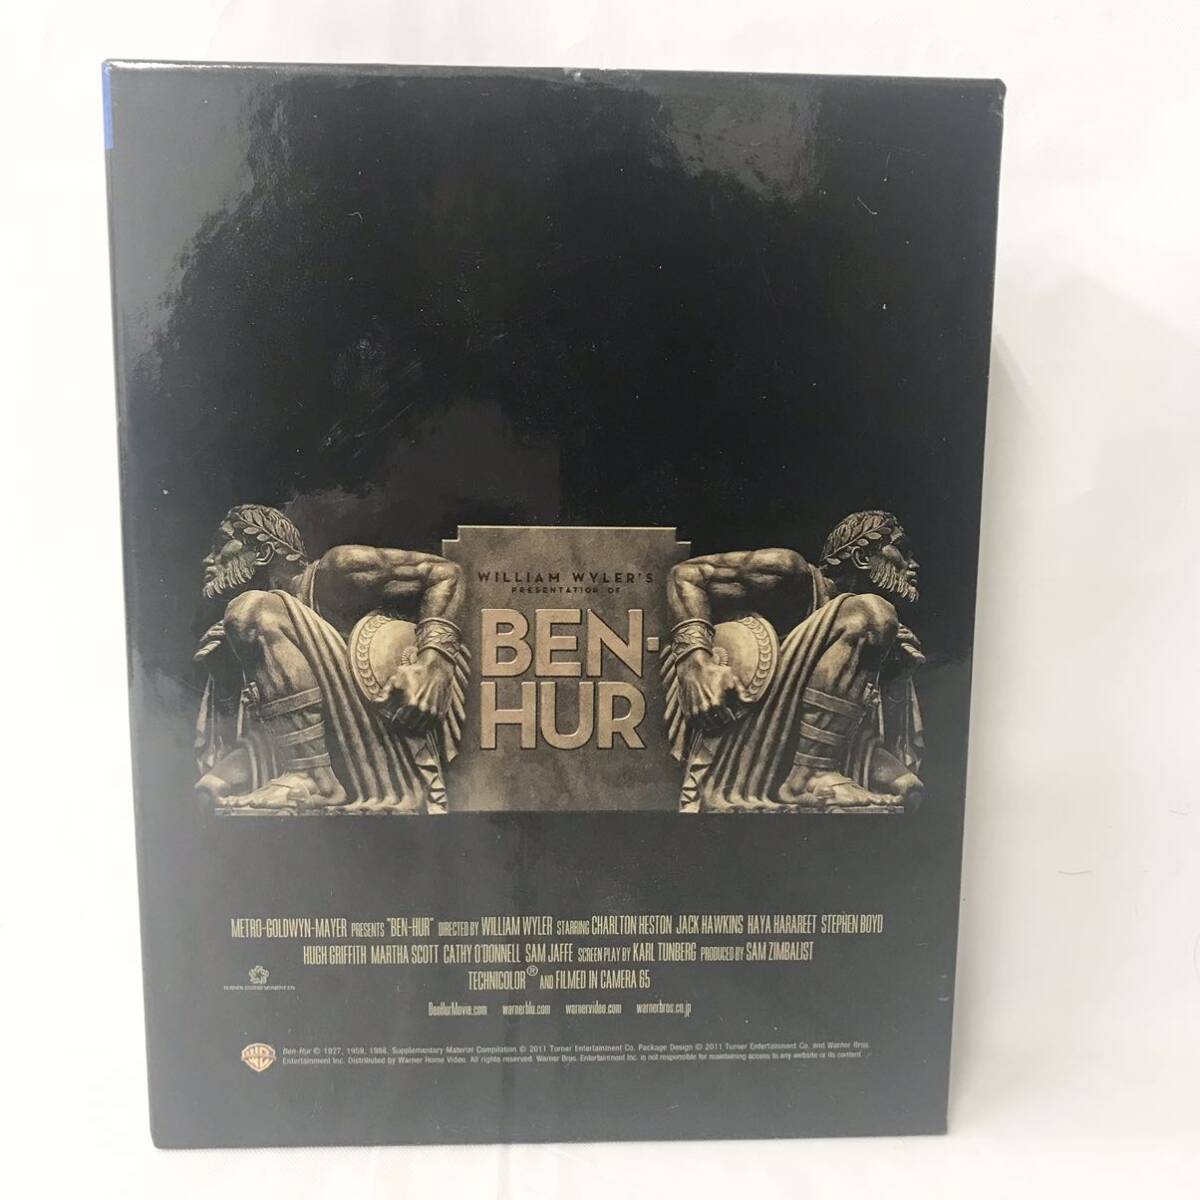 F03016 Blu-ray Disc BEN-HUR ベン・ハー FIFTIETH ANNVESARY WILLAM WYLER'S 本編:223分 字幕:英語・日本語 ワーナー・ホーム・ビデオ_画像2